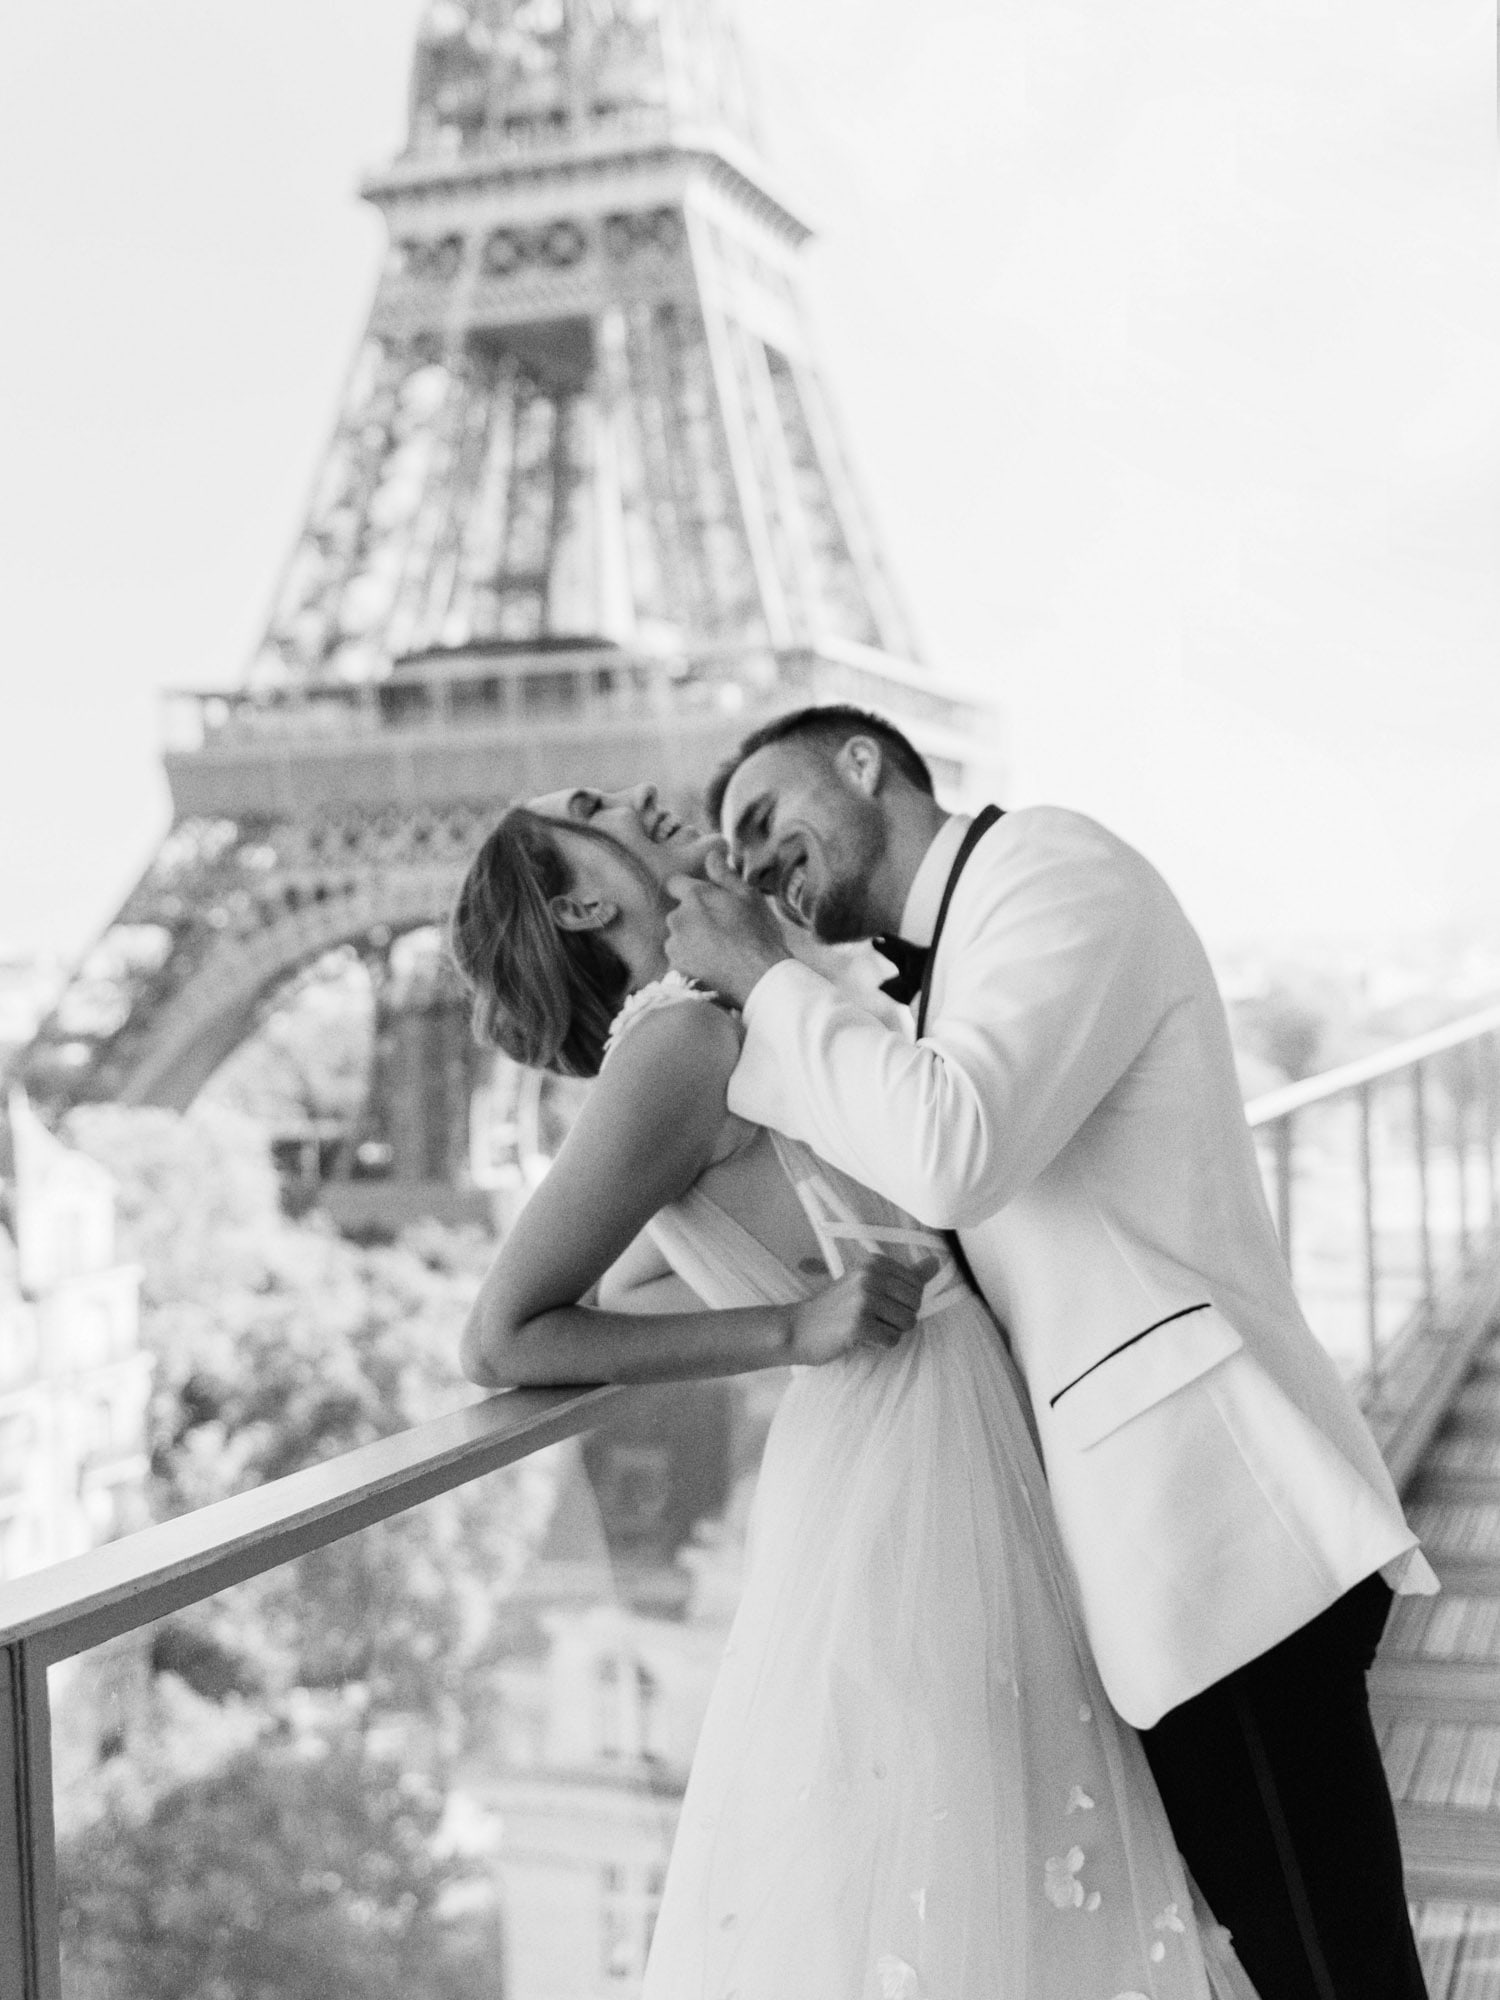 Hannah and Michael’s Dreamy Parisian photoshoot